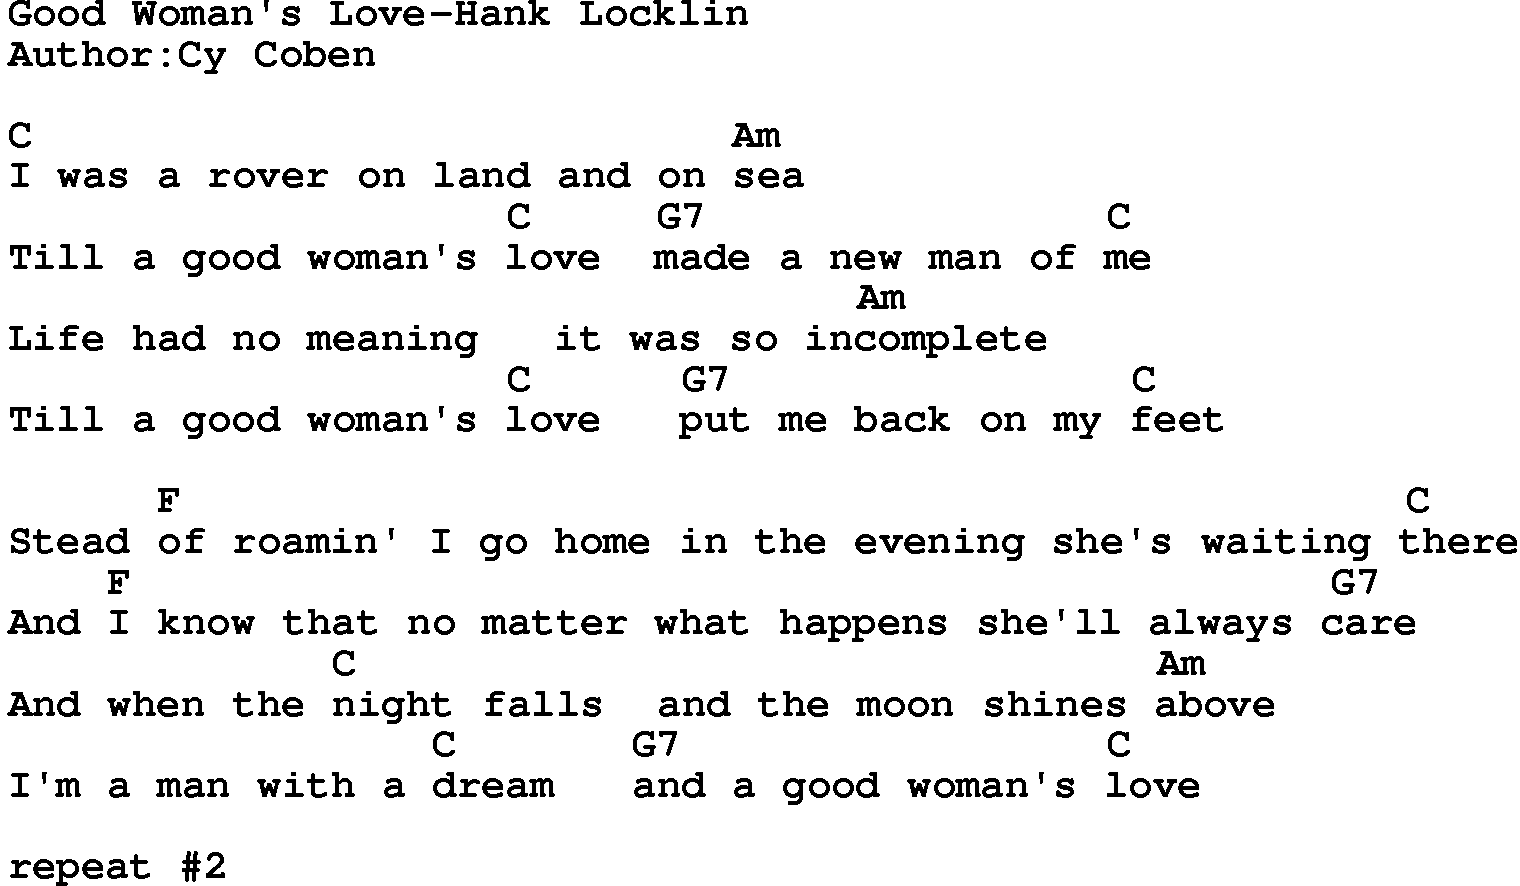 Country music song: Good Woman's Love-Hank Locklin  lyrics and chords